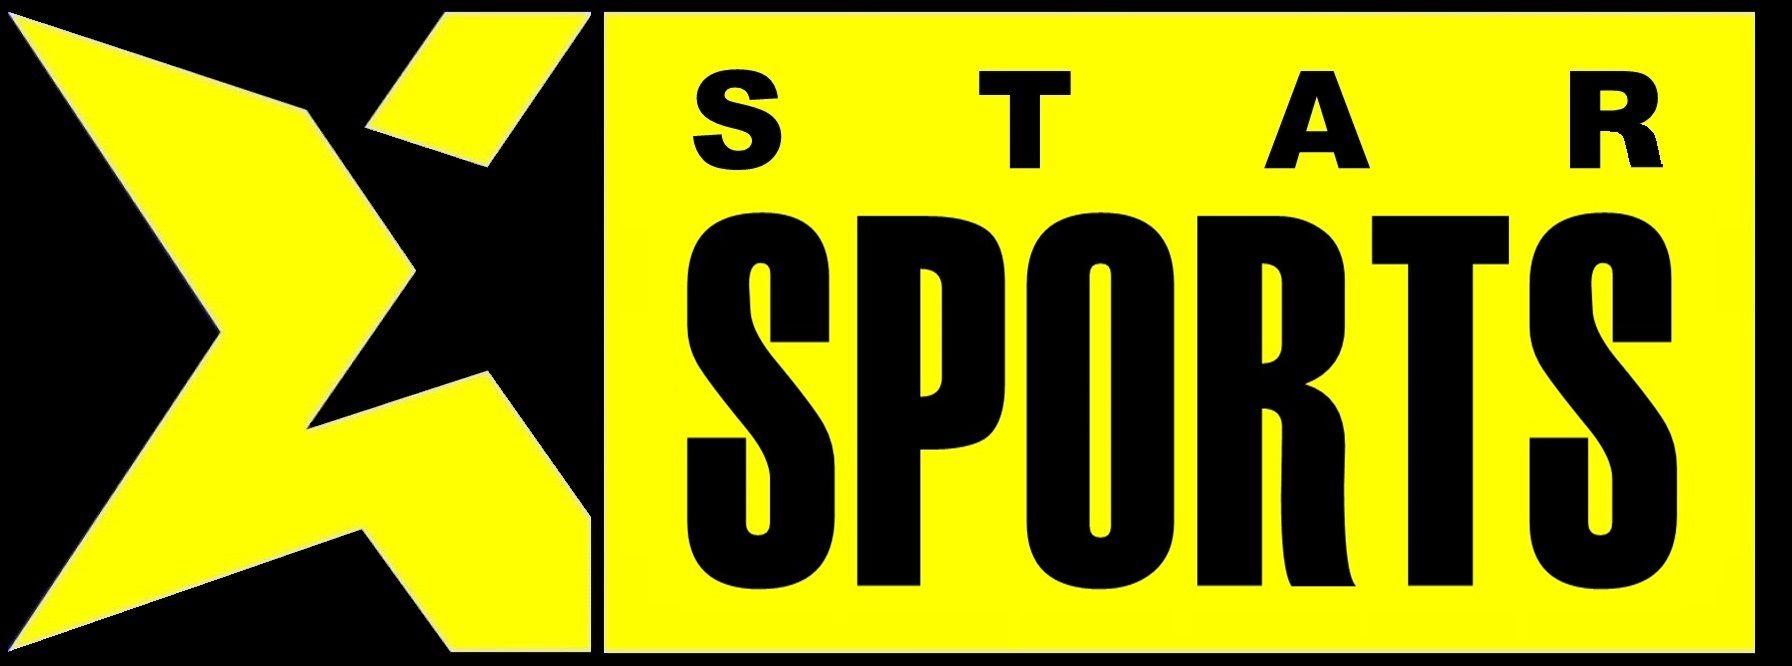 Yellow Sports Logo - Star Sports